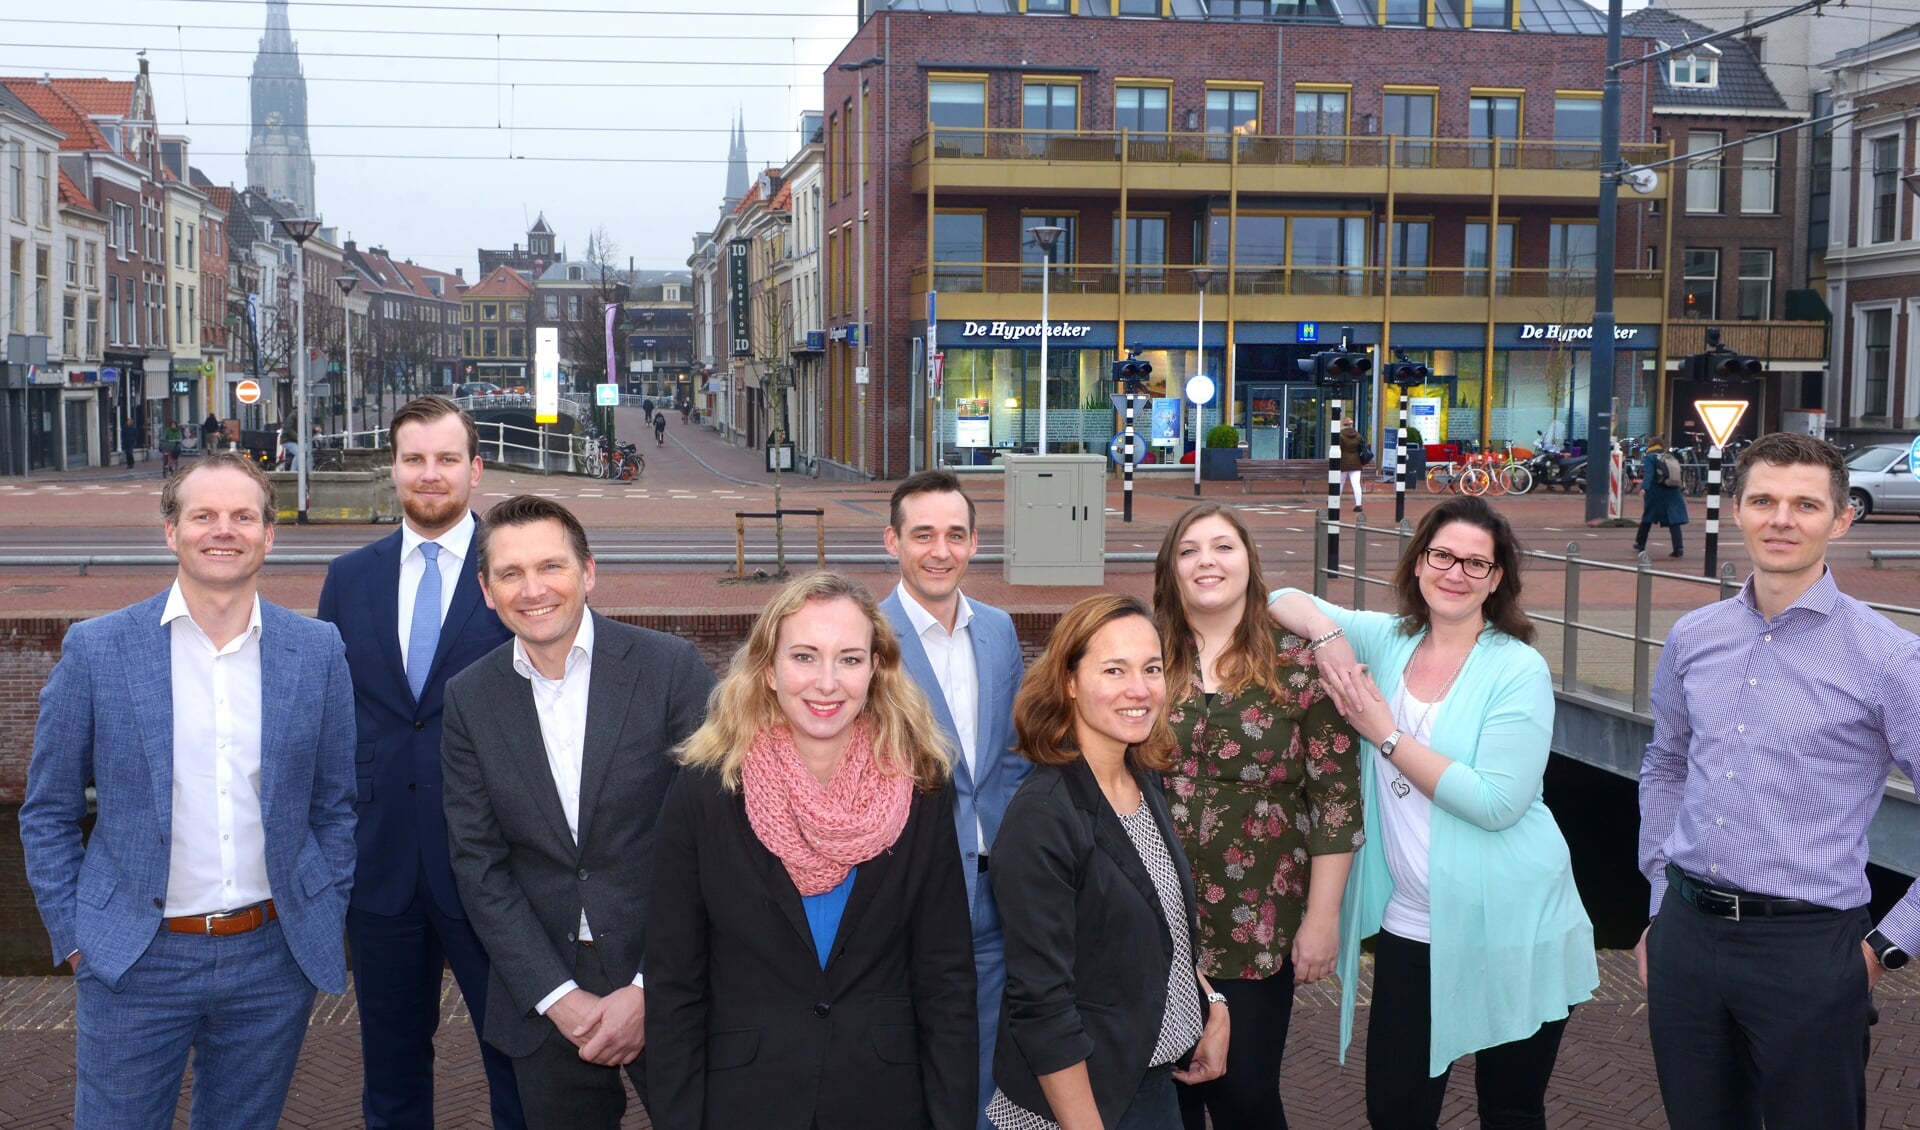 Het team van De Hypotheker Delft, vlnr Harpert, Rick, Olaf, Sascha, Michel, Sapoeti, Megan, Sanne en Arjan.